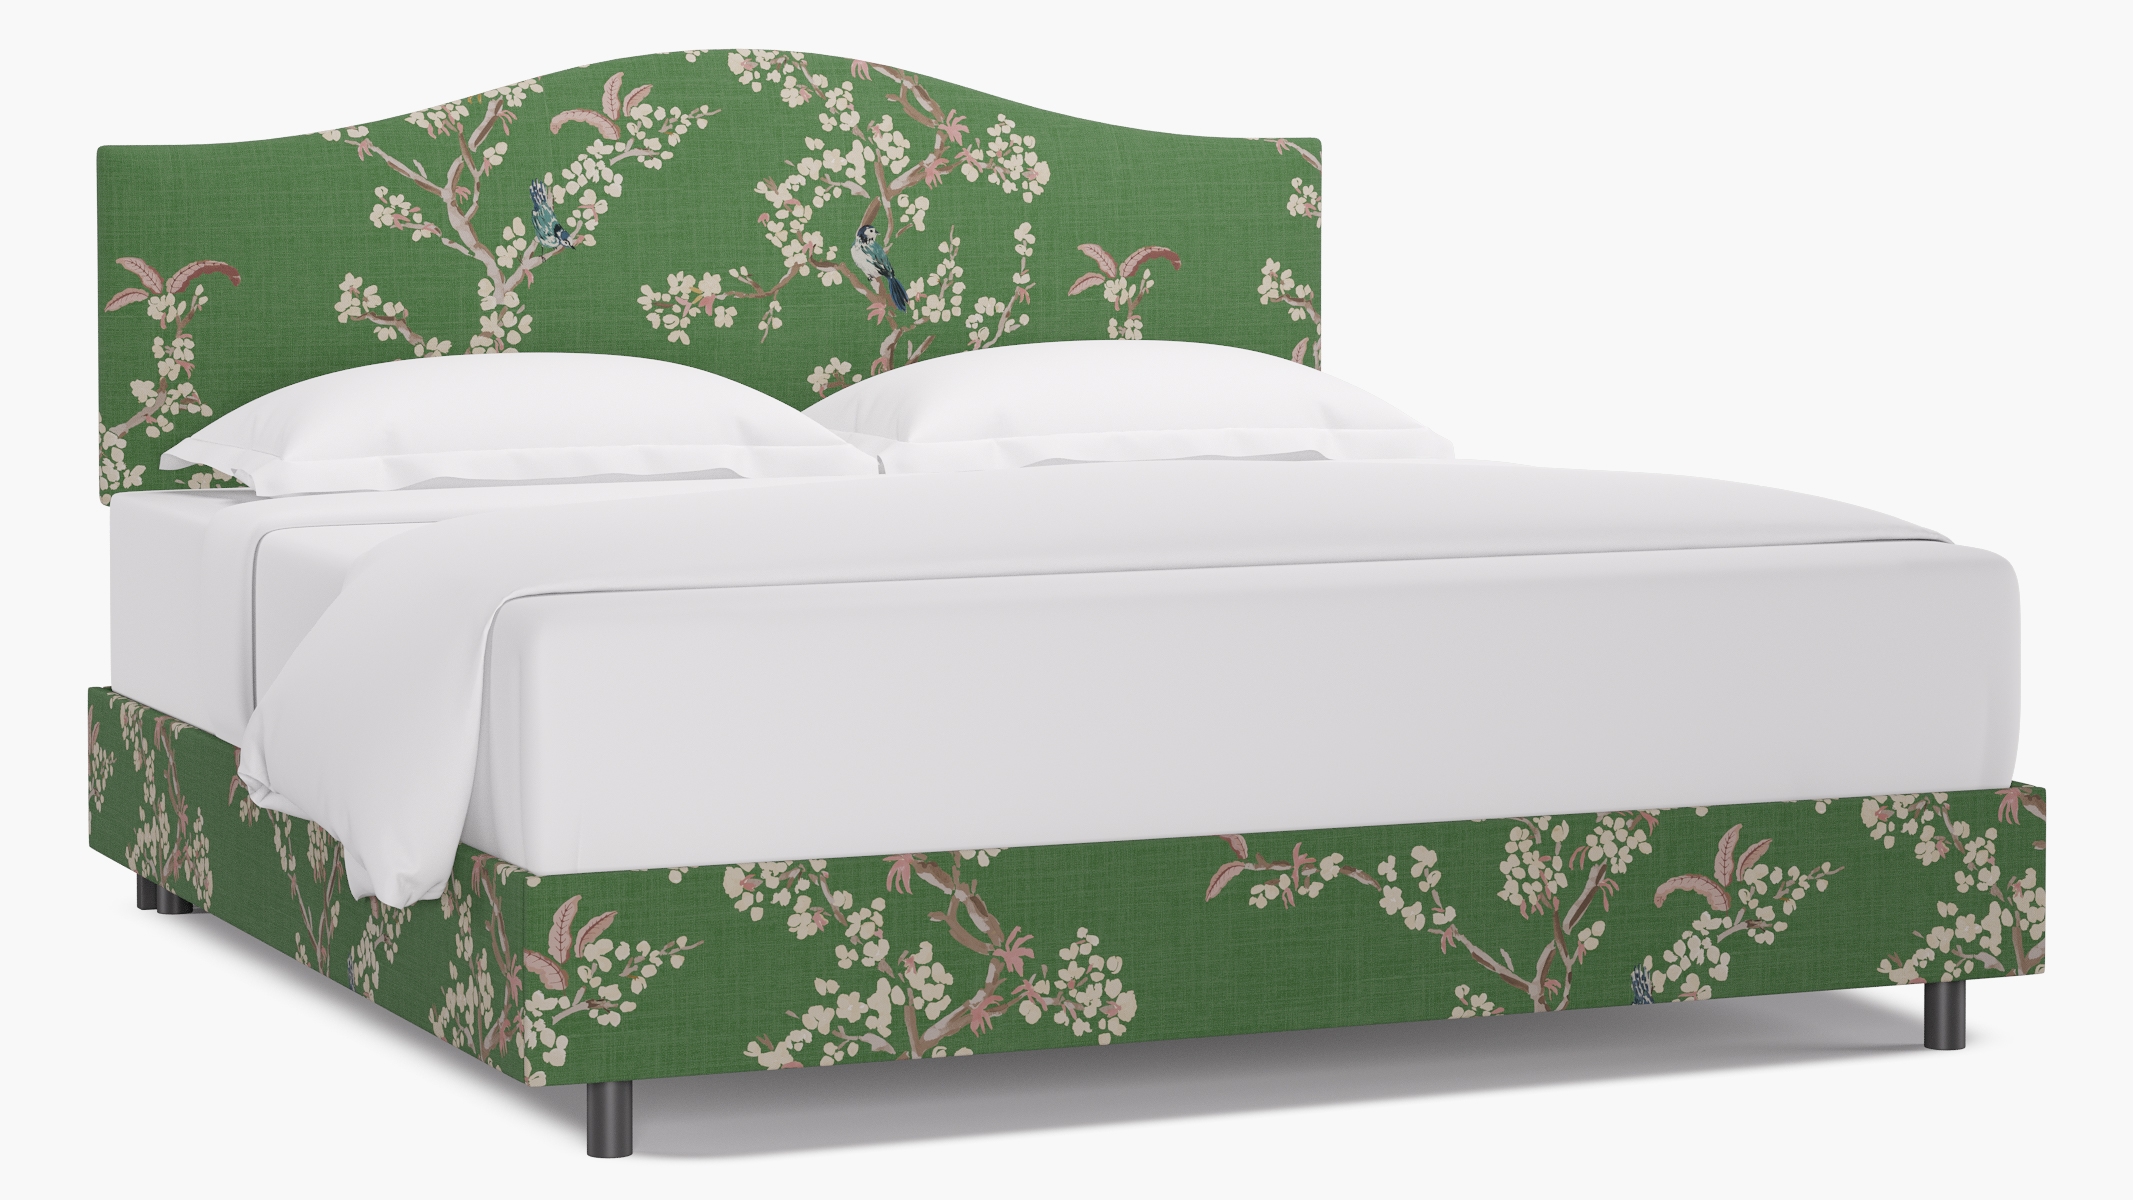 Camelback Bed, Jade Cherry Blossom, King - Image 0